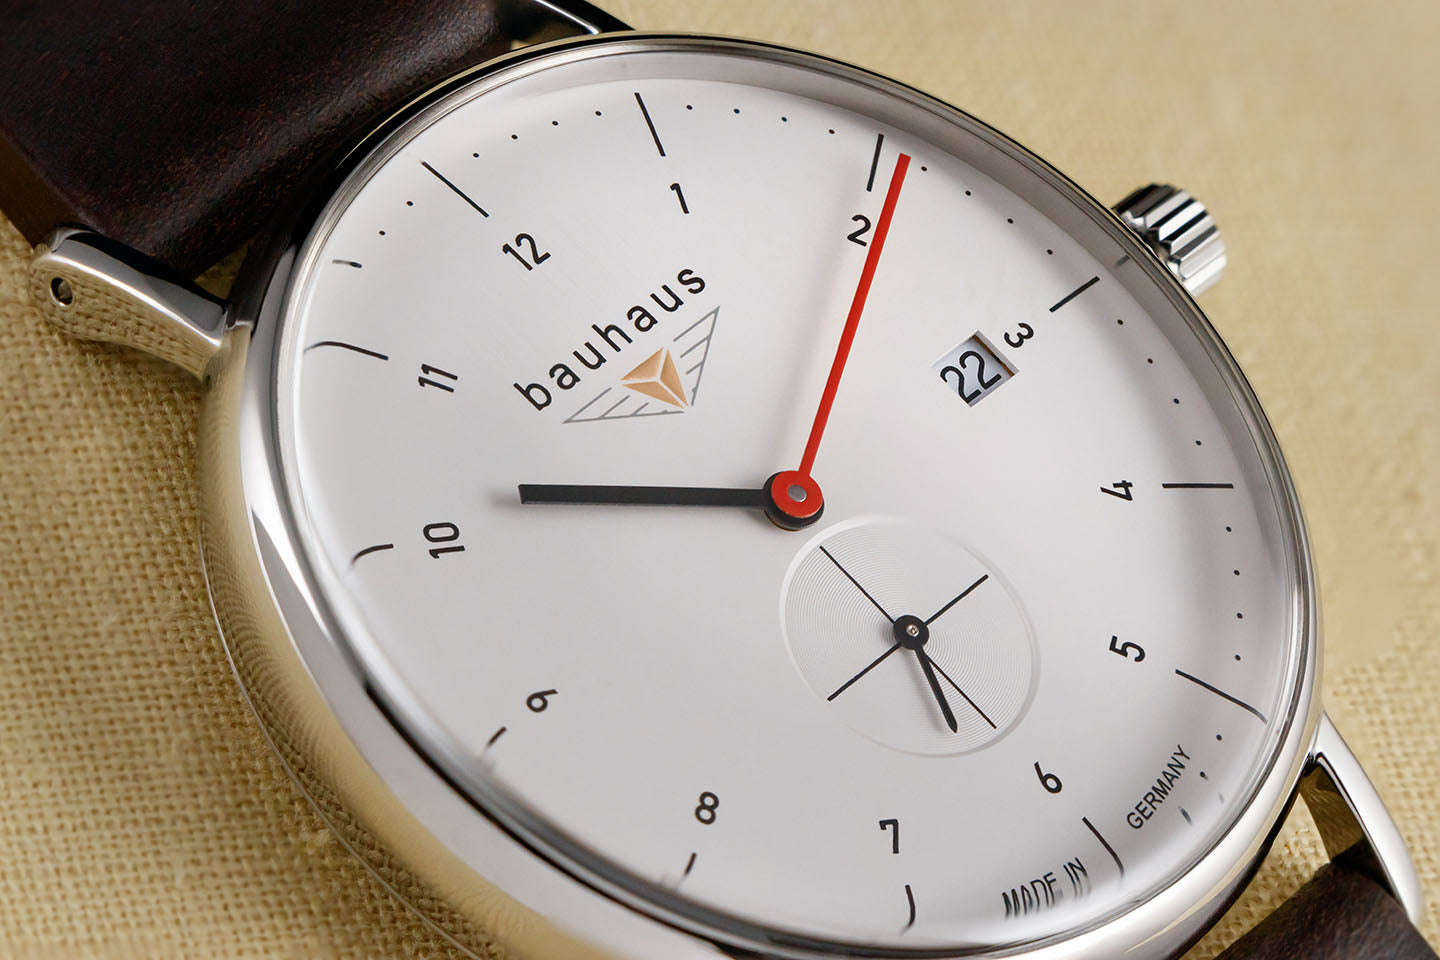 Bauhaus 2140-4 Men\'s Watch Swiss Movement with Date display